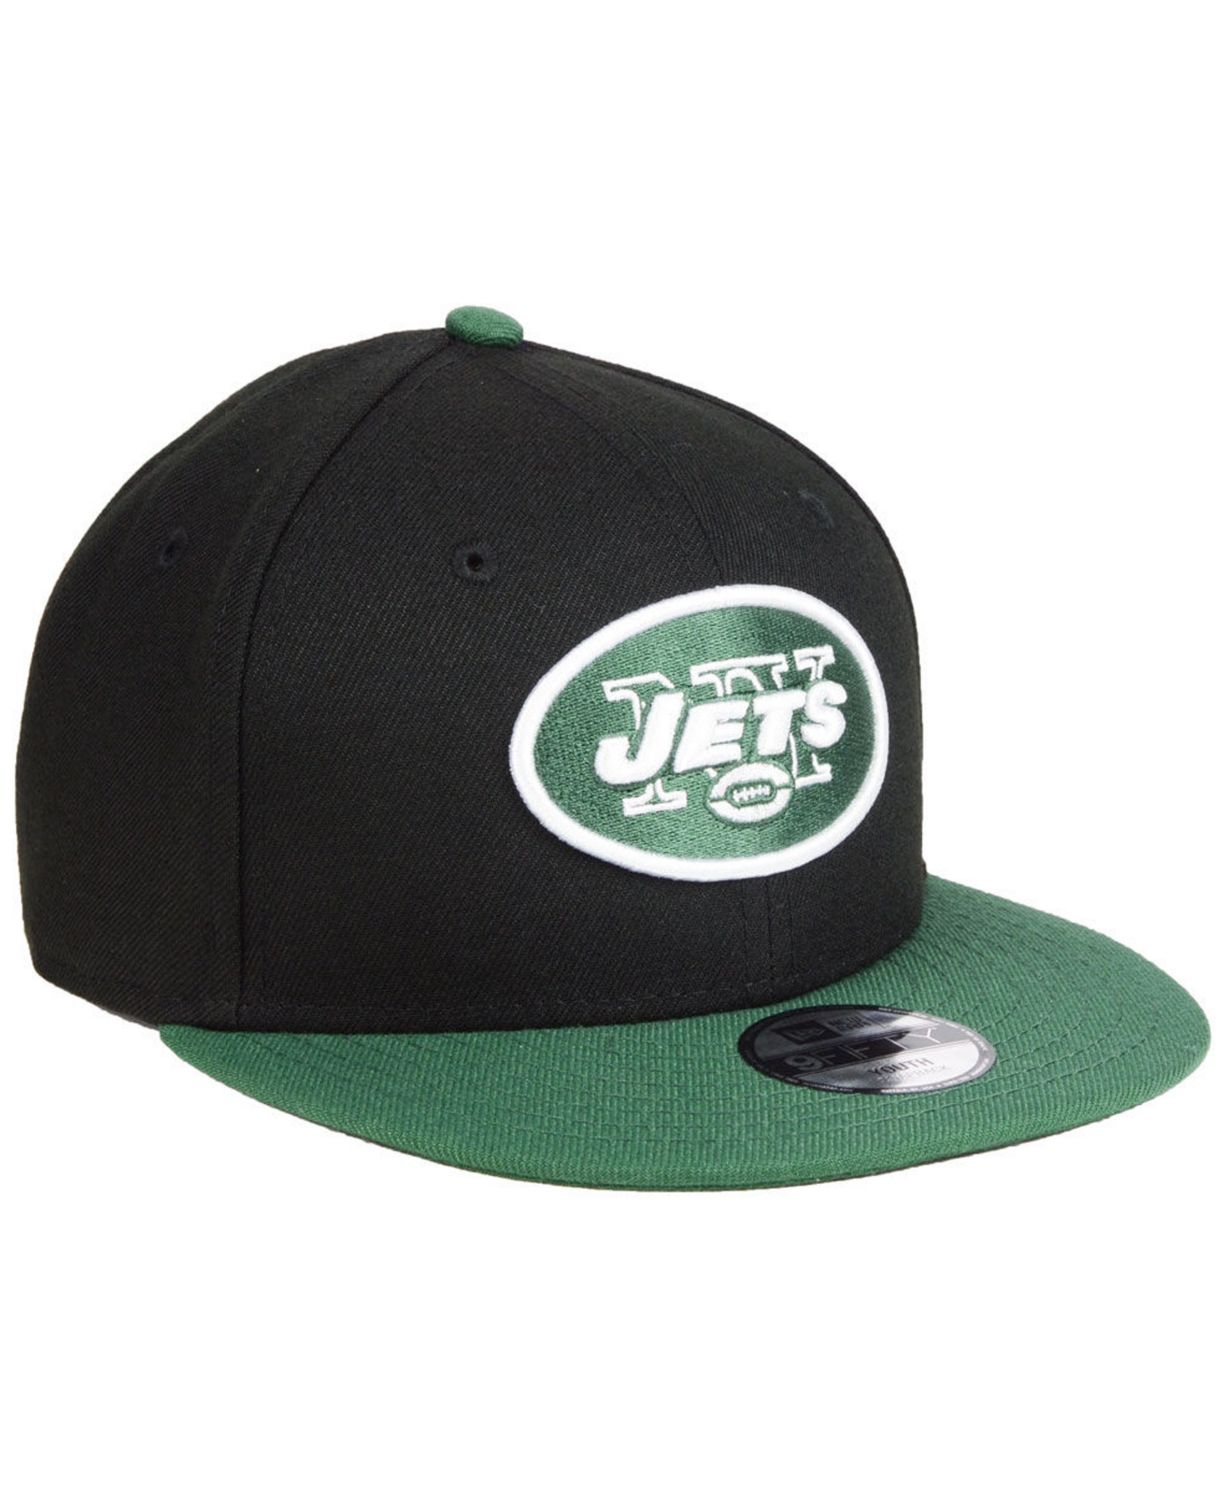 New Era Boys' New York Jets Two Tone 9FIFTY Snapback Cap & Reviews - Sports Fan Shop By Lids - Men - Macy's